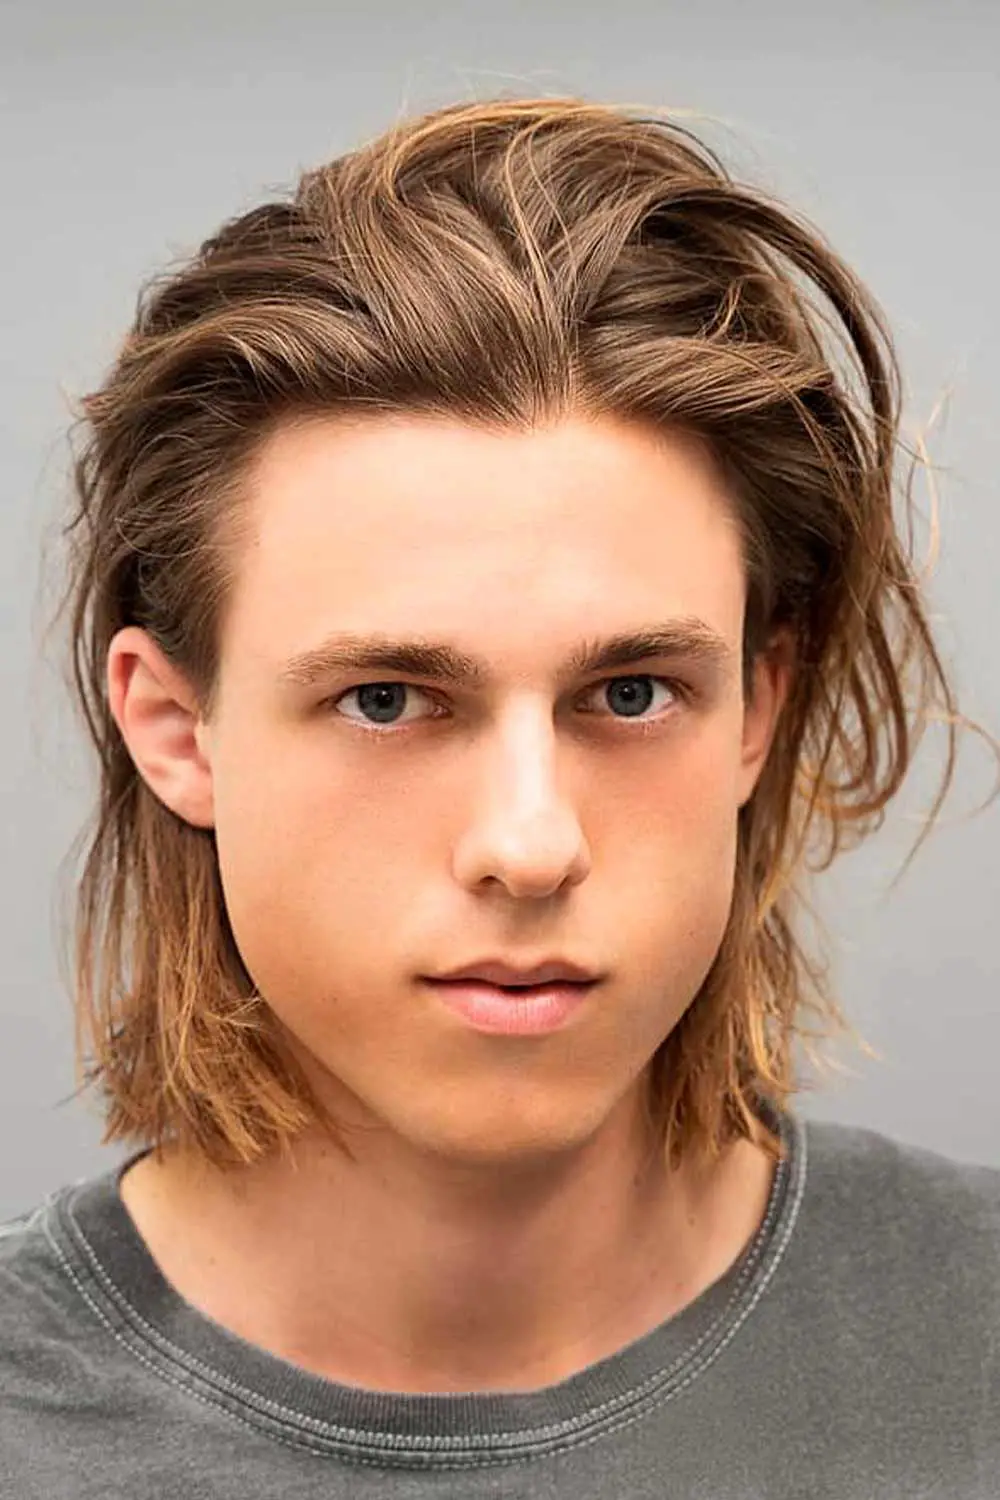 100-best-teenage-boys-haircuts-trending-this-year Medium Length Hair